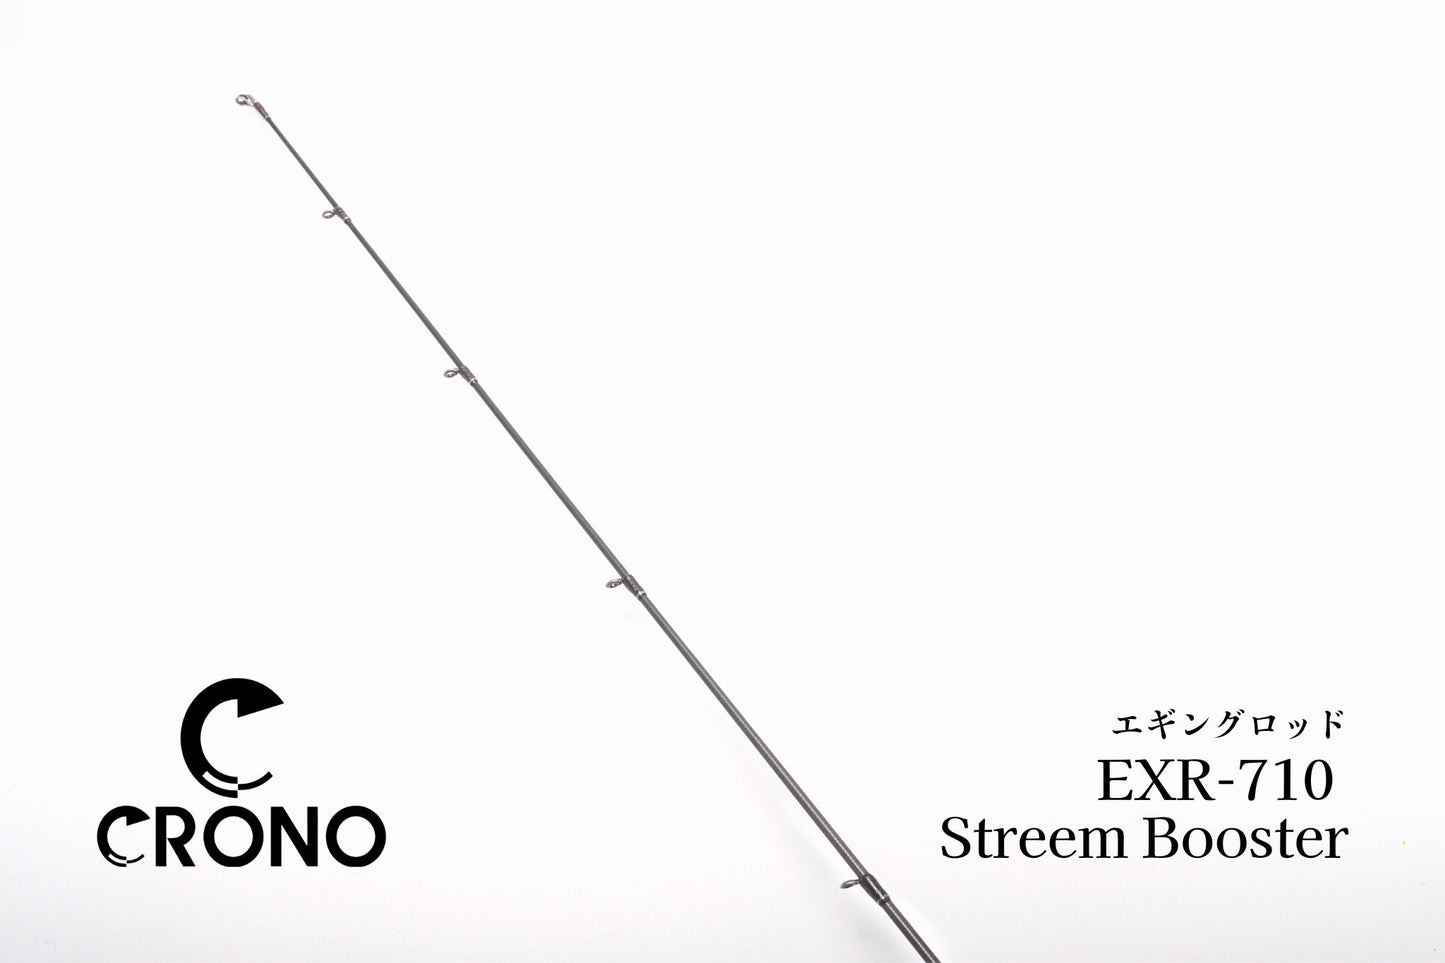 EXR-710 Streem Booster